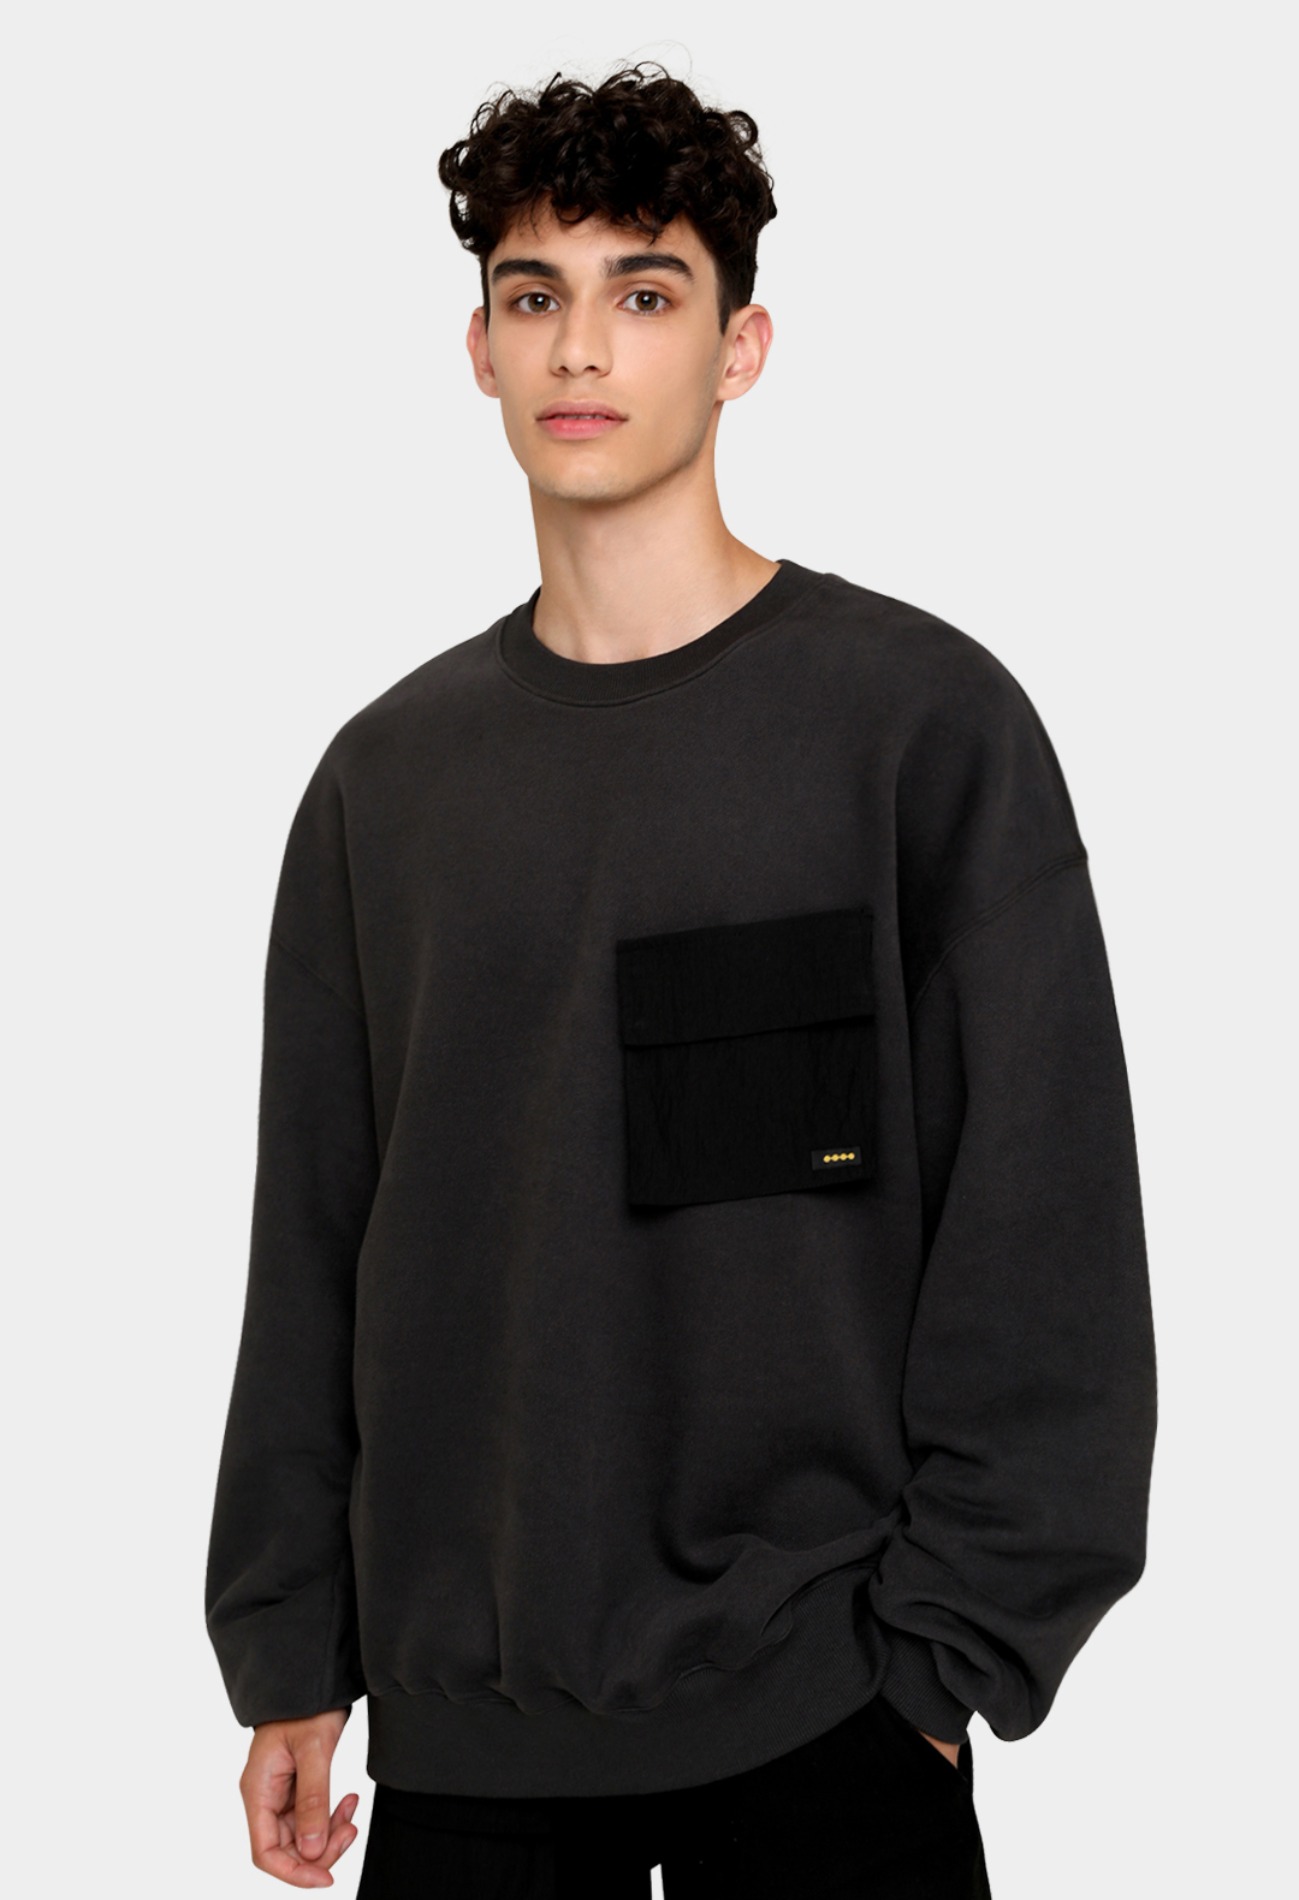 keek [Unisex] Pocket Reversible Sweatshirts - Charcoal 스트릿패션 유니섹스브랜드 커플시밀러룩 남자쇼핑몰 여성의류쇼핑몰 후드티 힙색